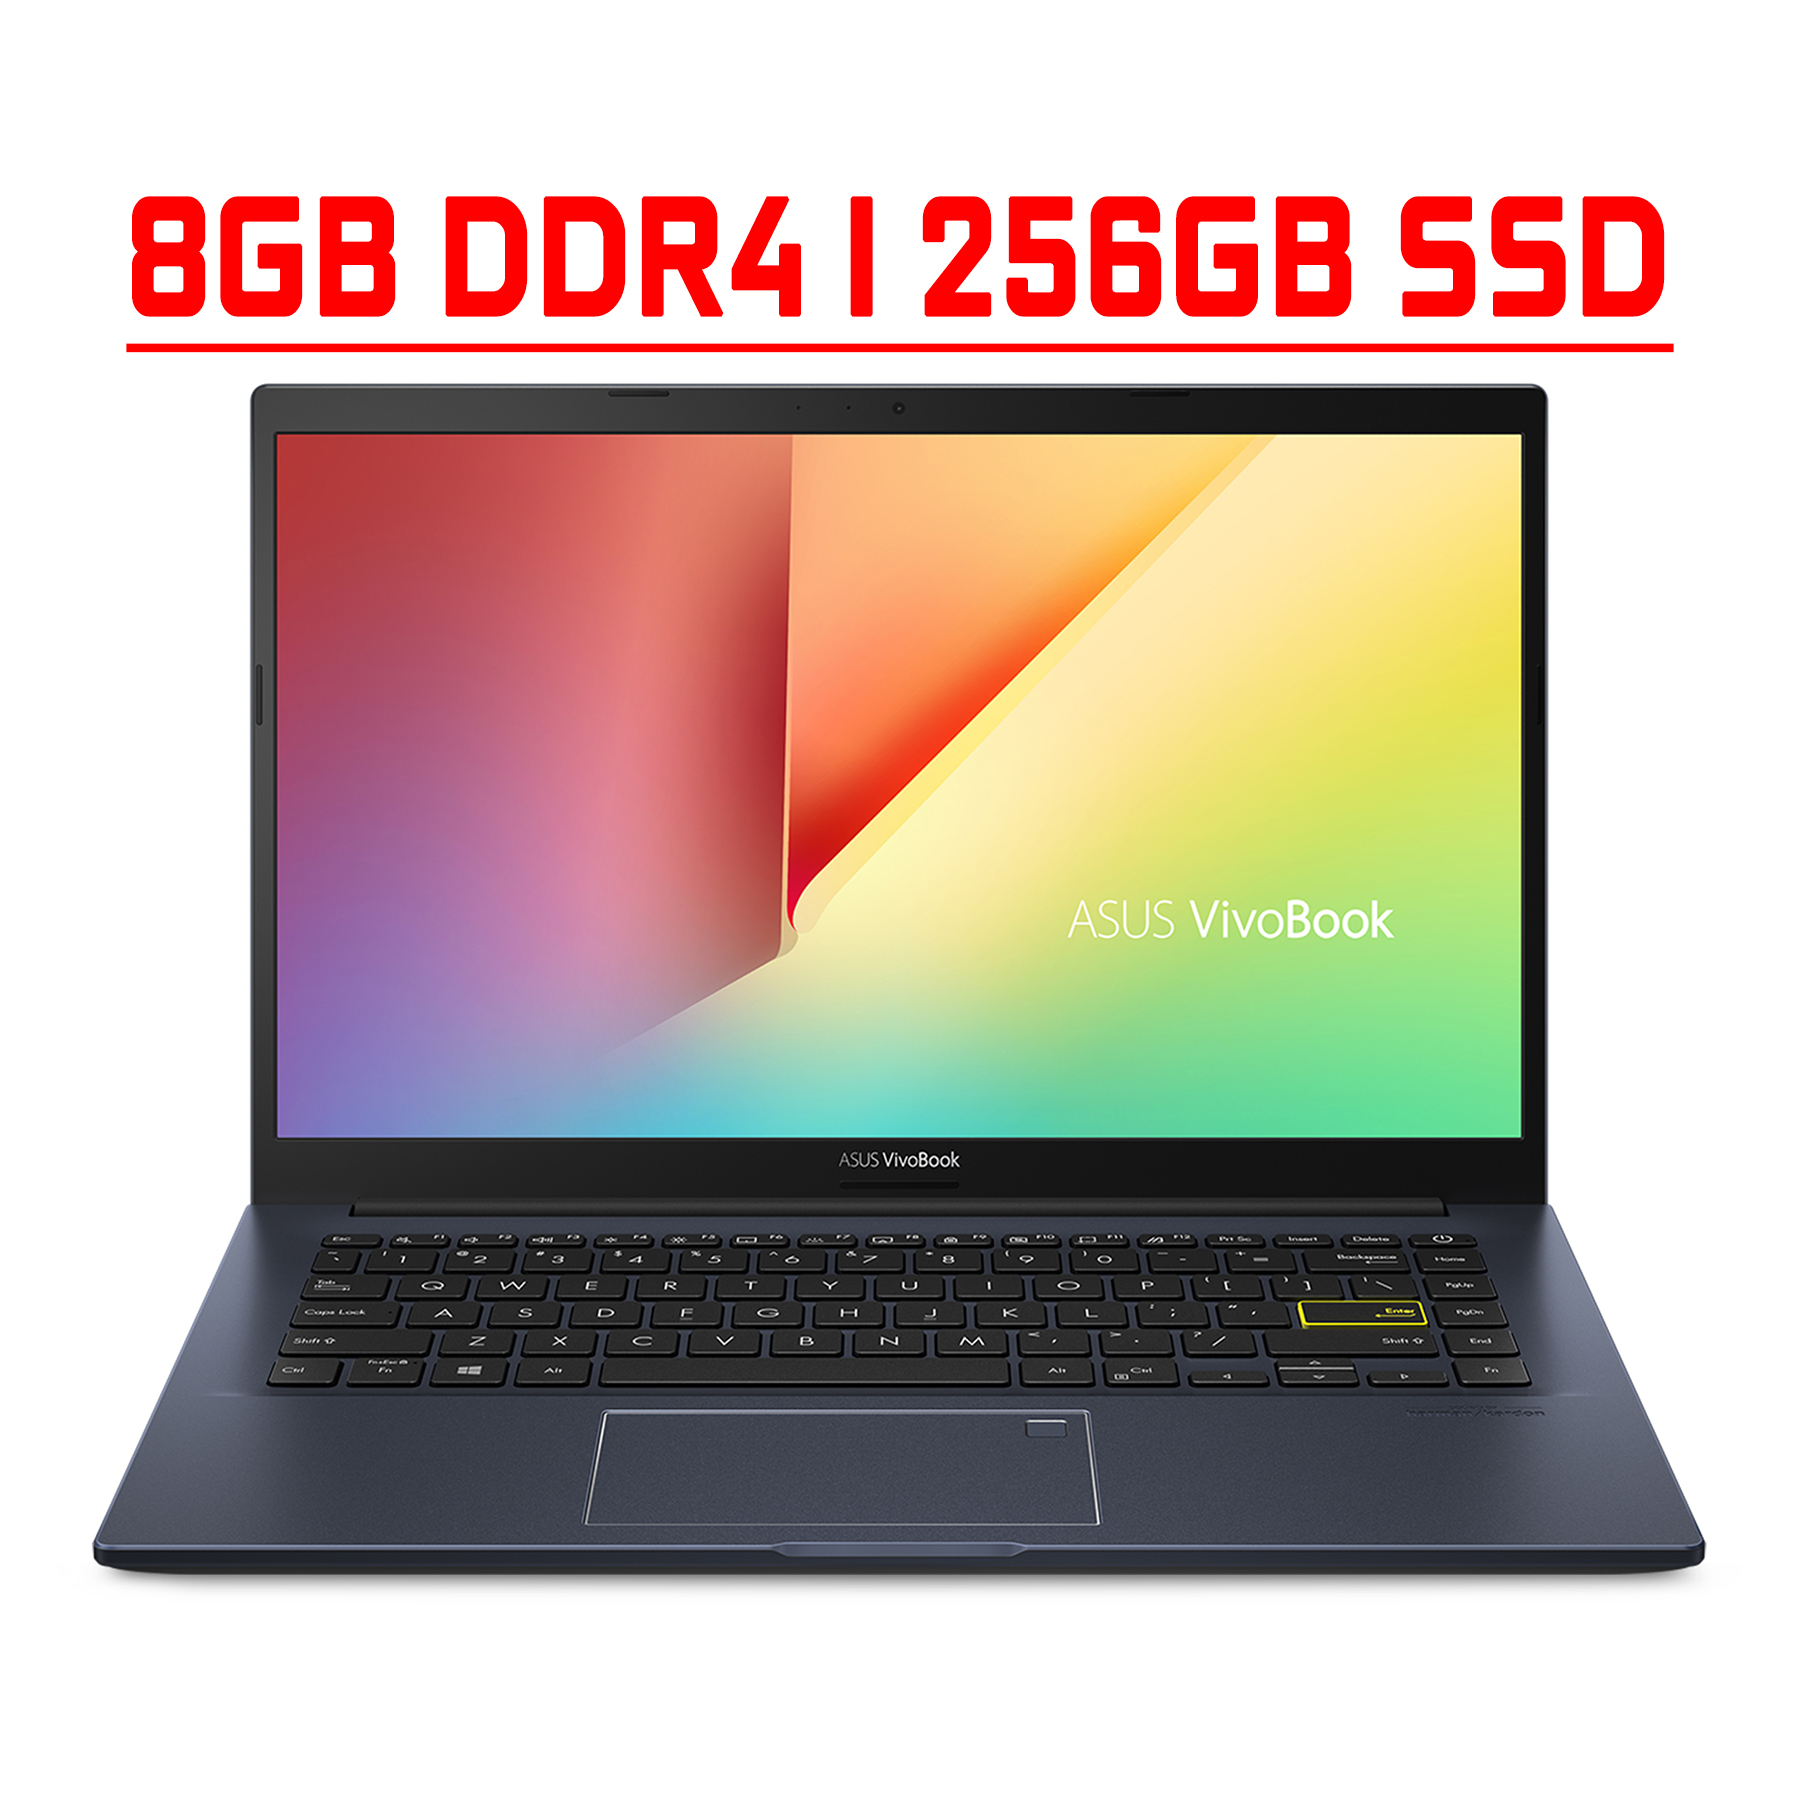 Asus VivoBook 14 Premium Thin and Light Laptop 14” FHD Display AMD 4-Core Ryzen 5 3500U 8GB DDR4 256GB SSD Backlit Keyboard Fingerprint USB-C HDMI Wifi6 Harman Win10 - image 1 of 6